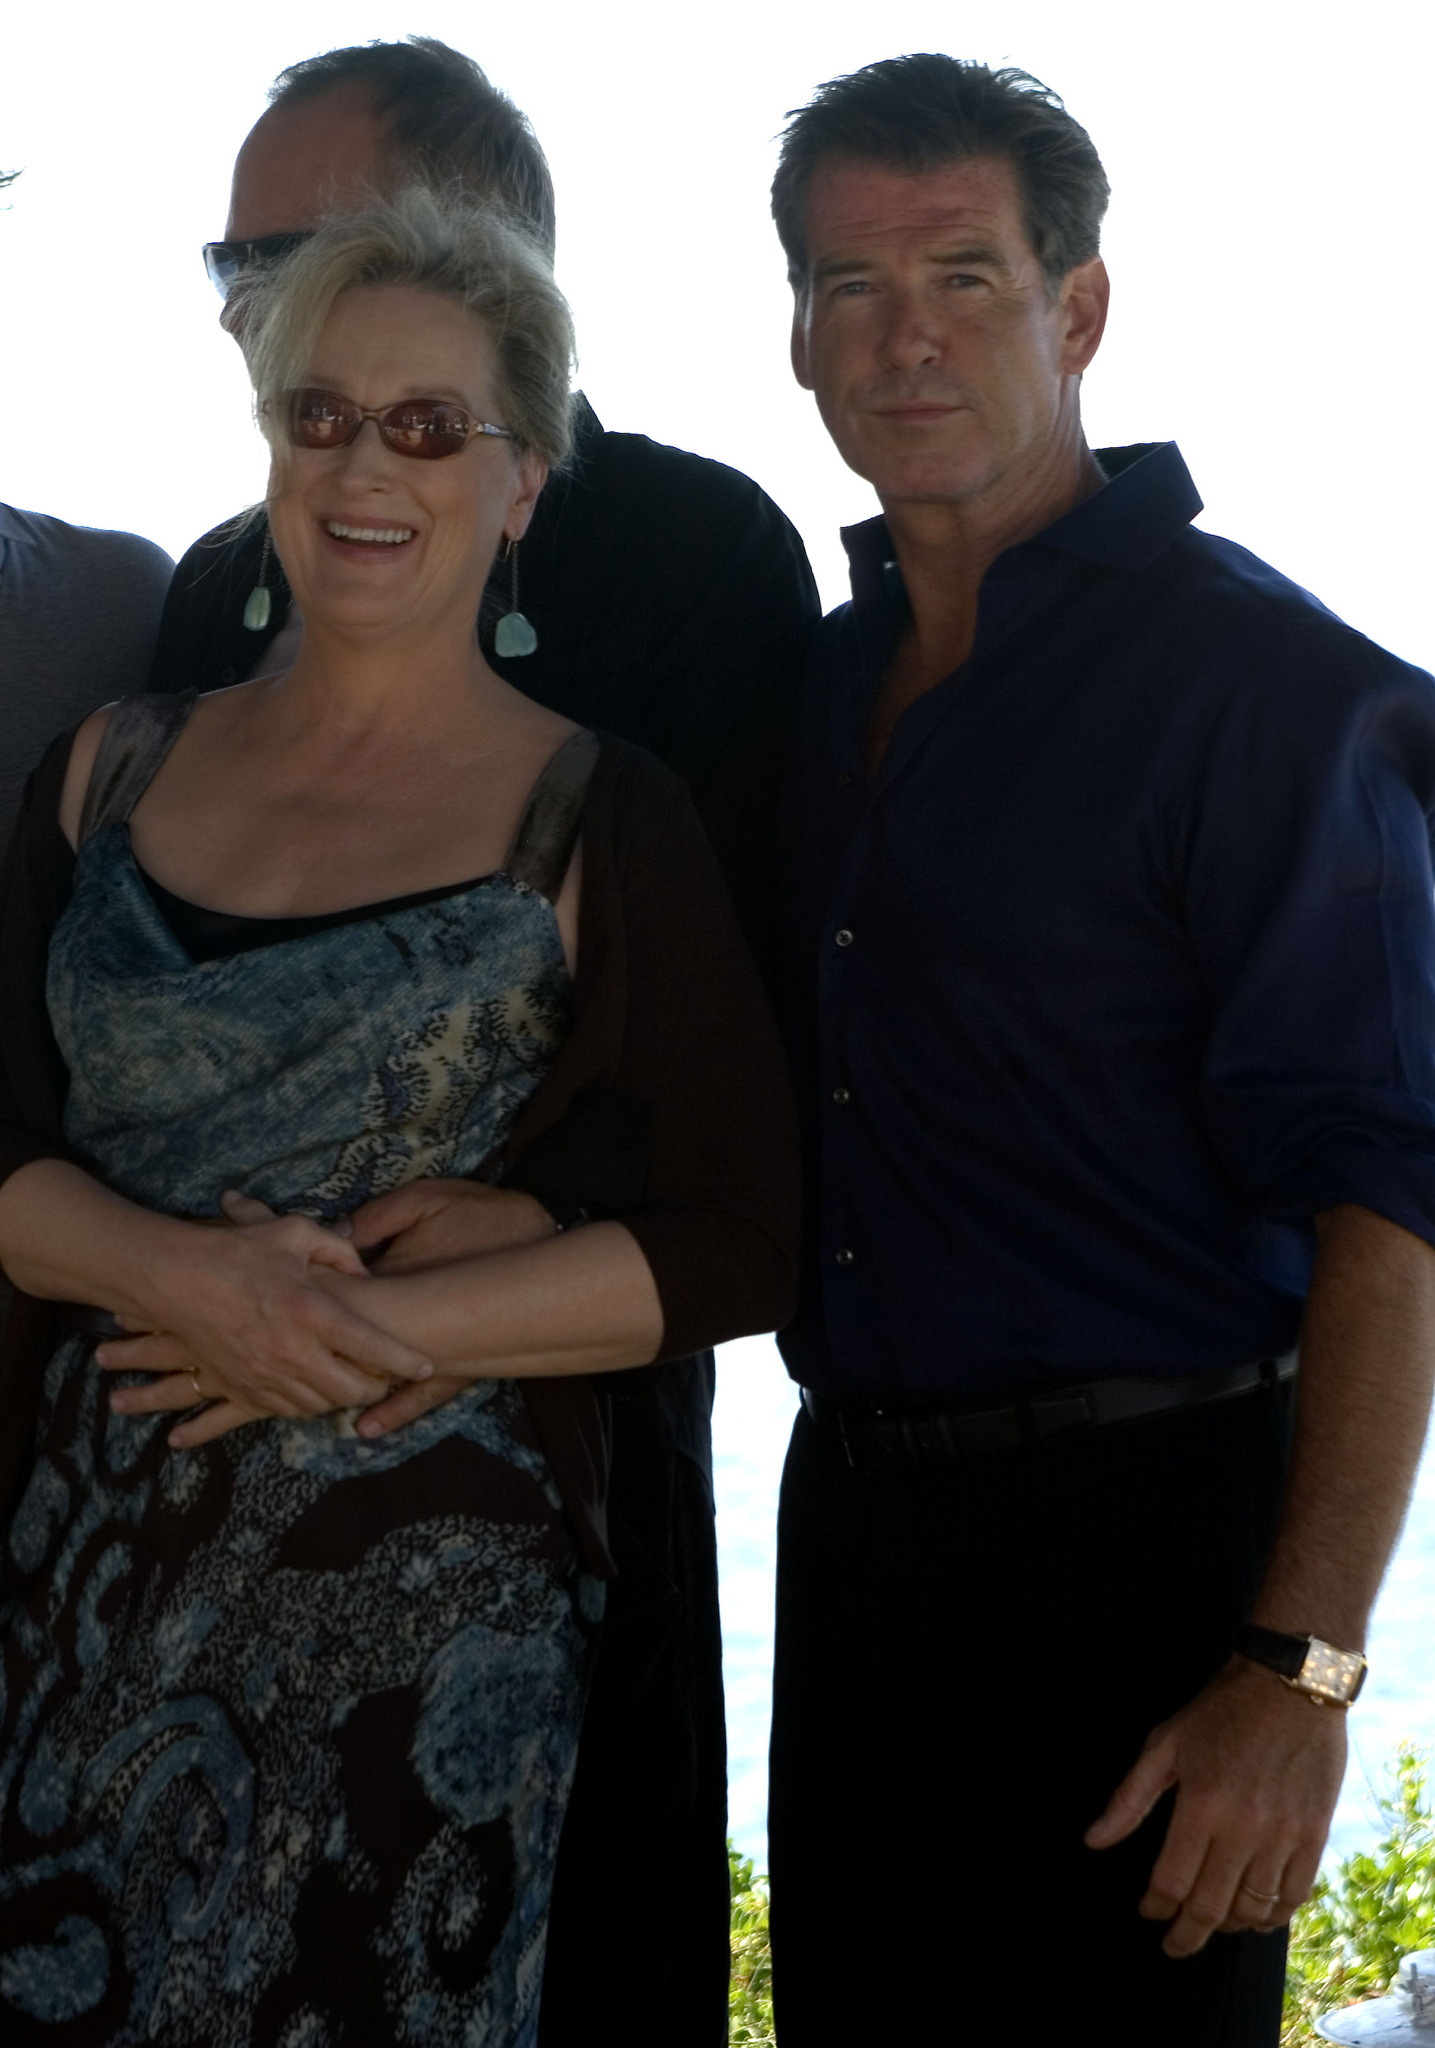 Pierce Brosnan and Meryl Streep at event of Mamma Mia! (2008)